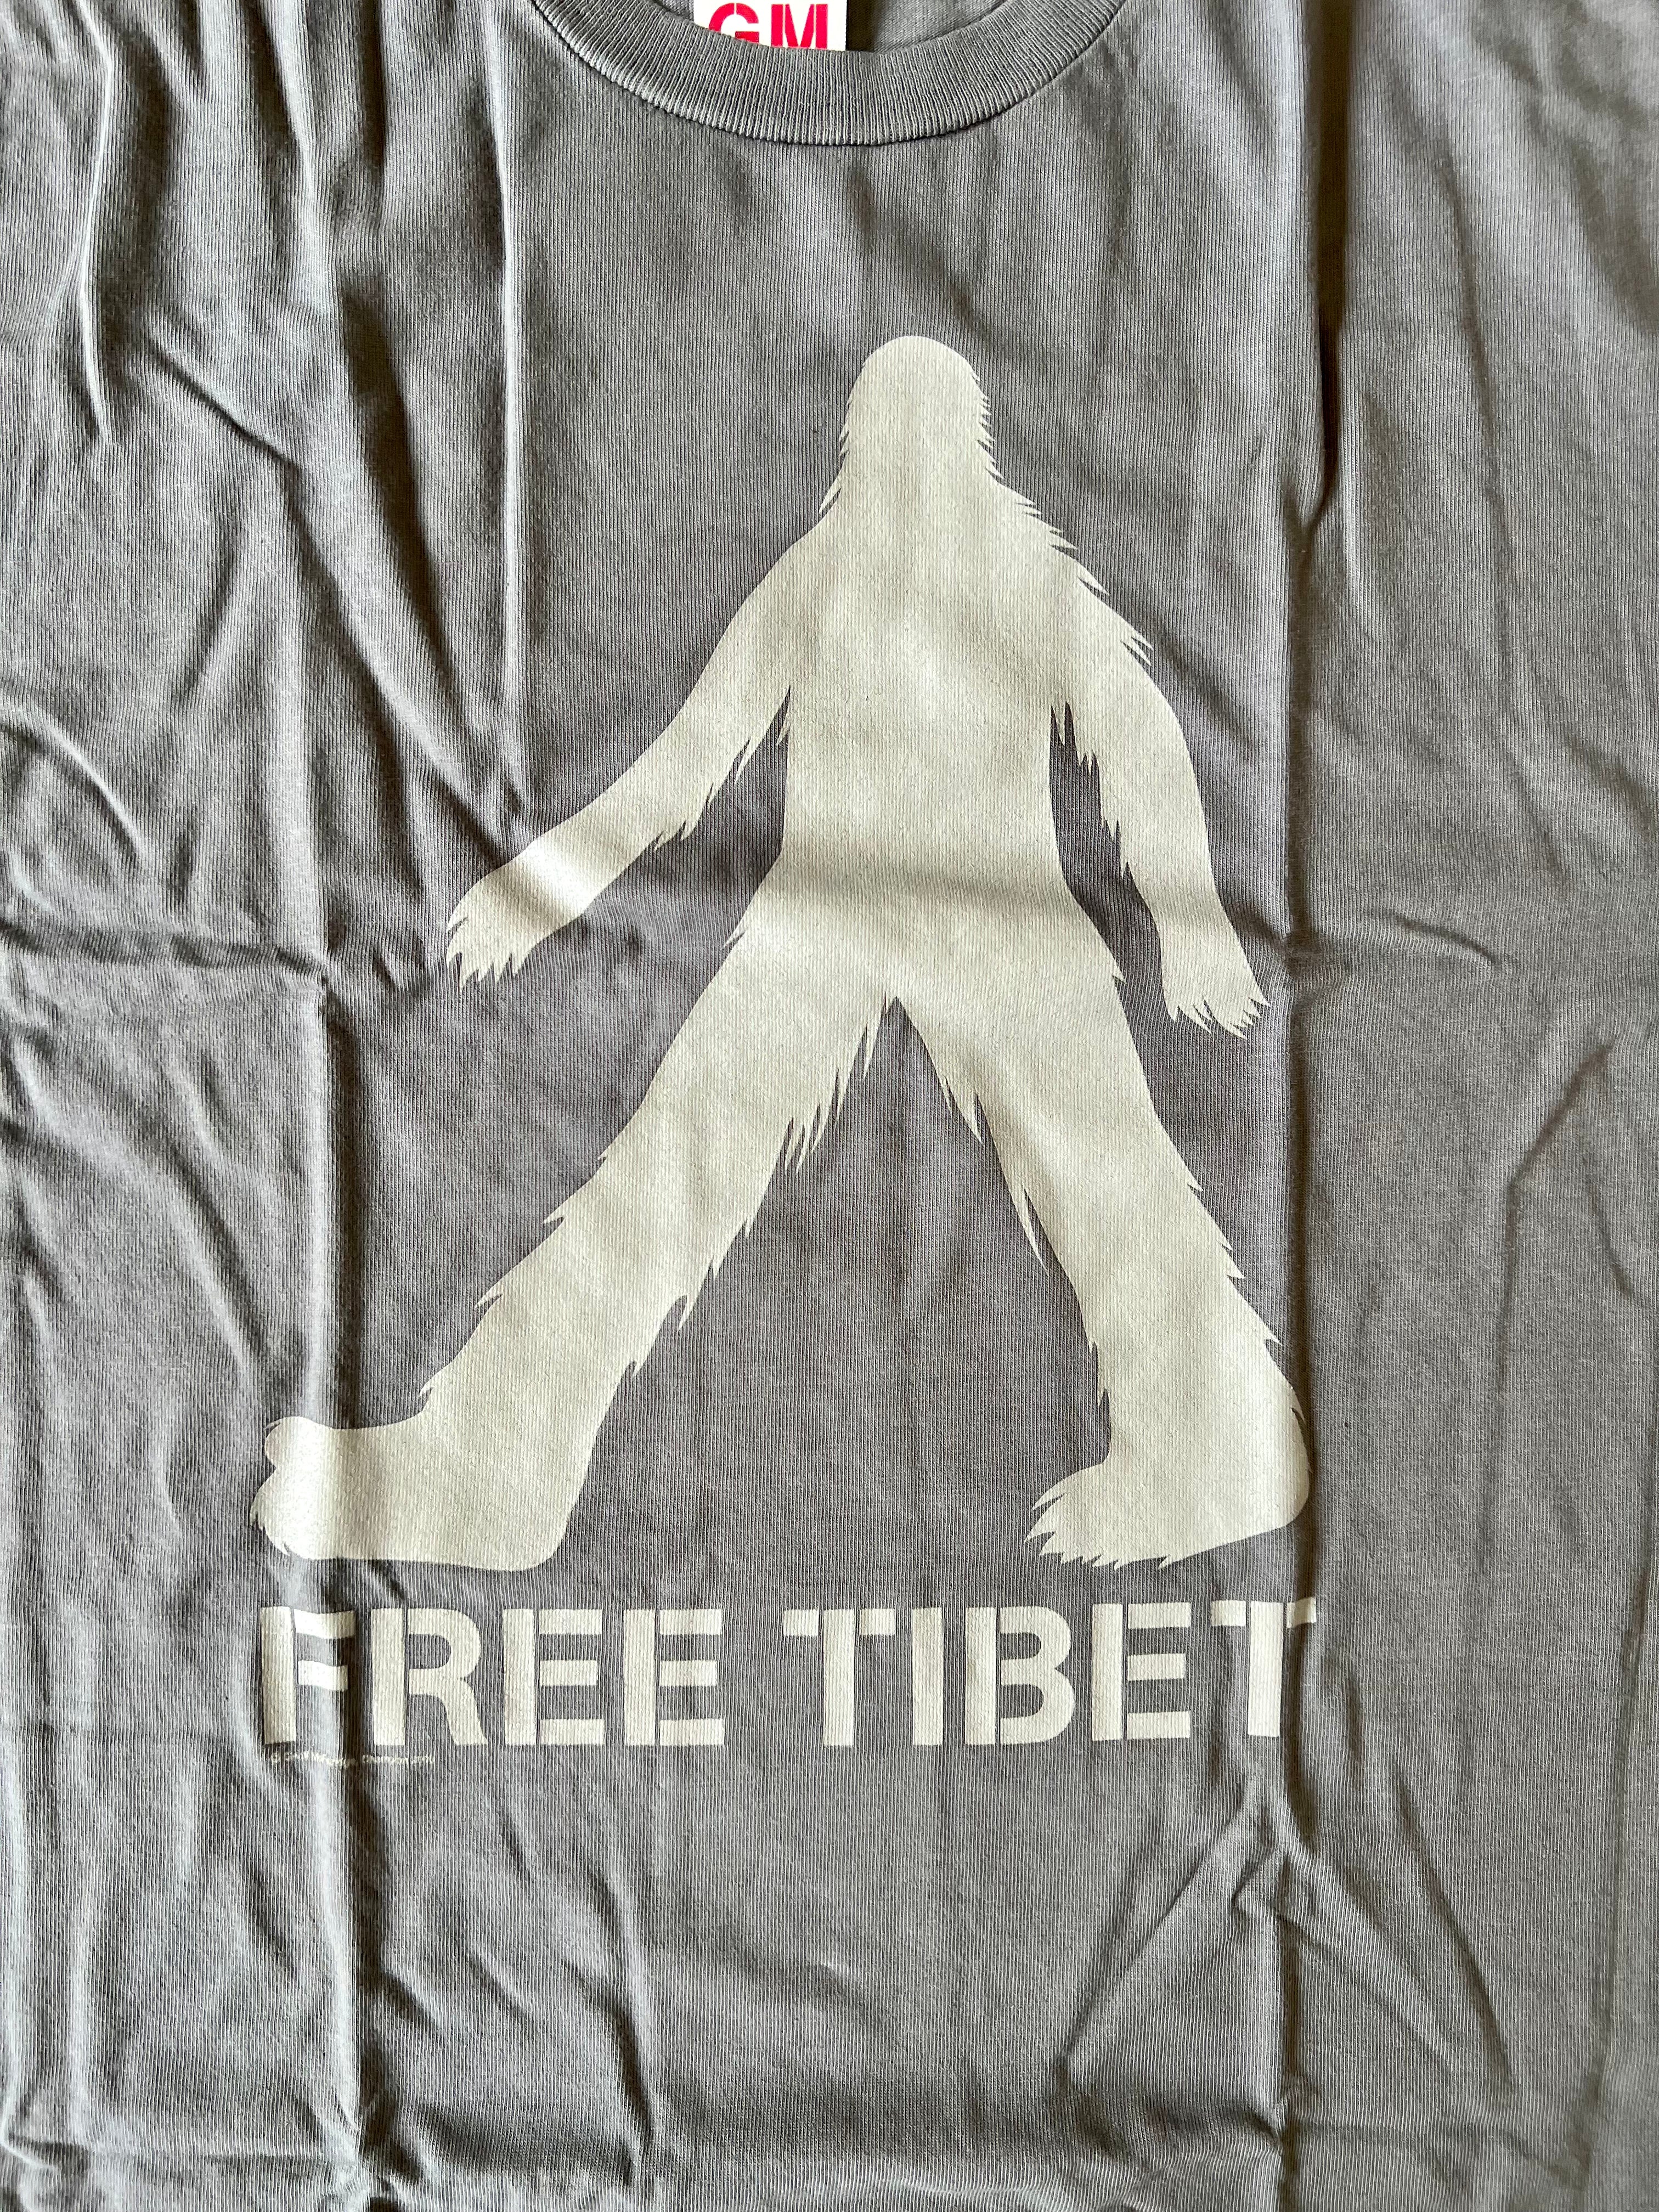 Geoff McFetridge x 2k, Free Tibet, c. 2001